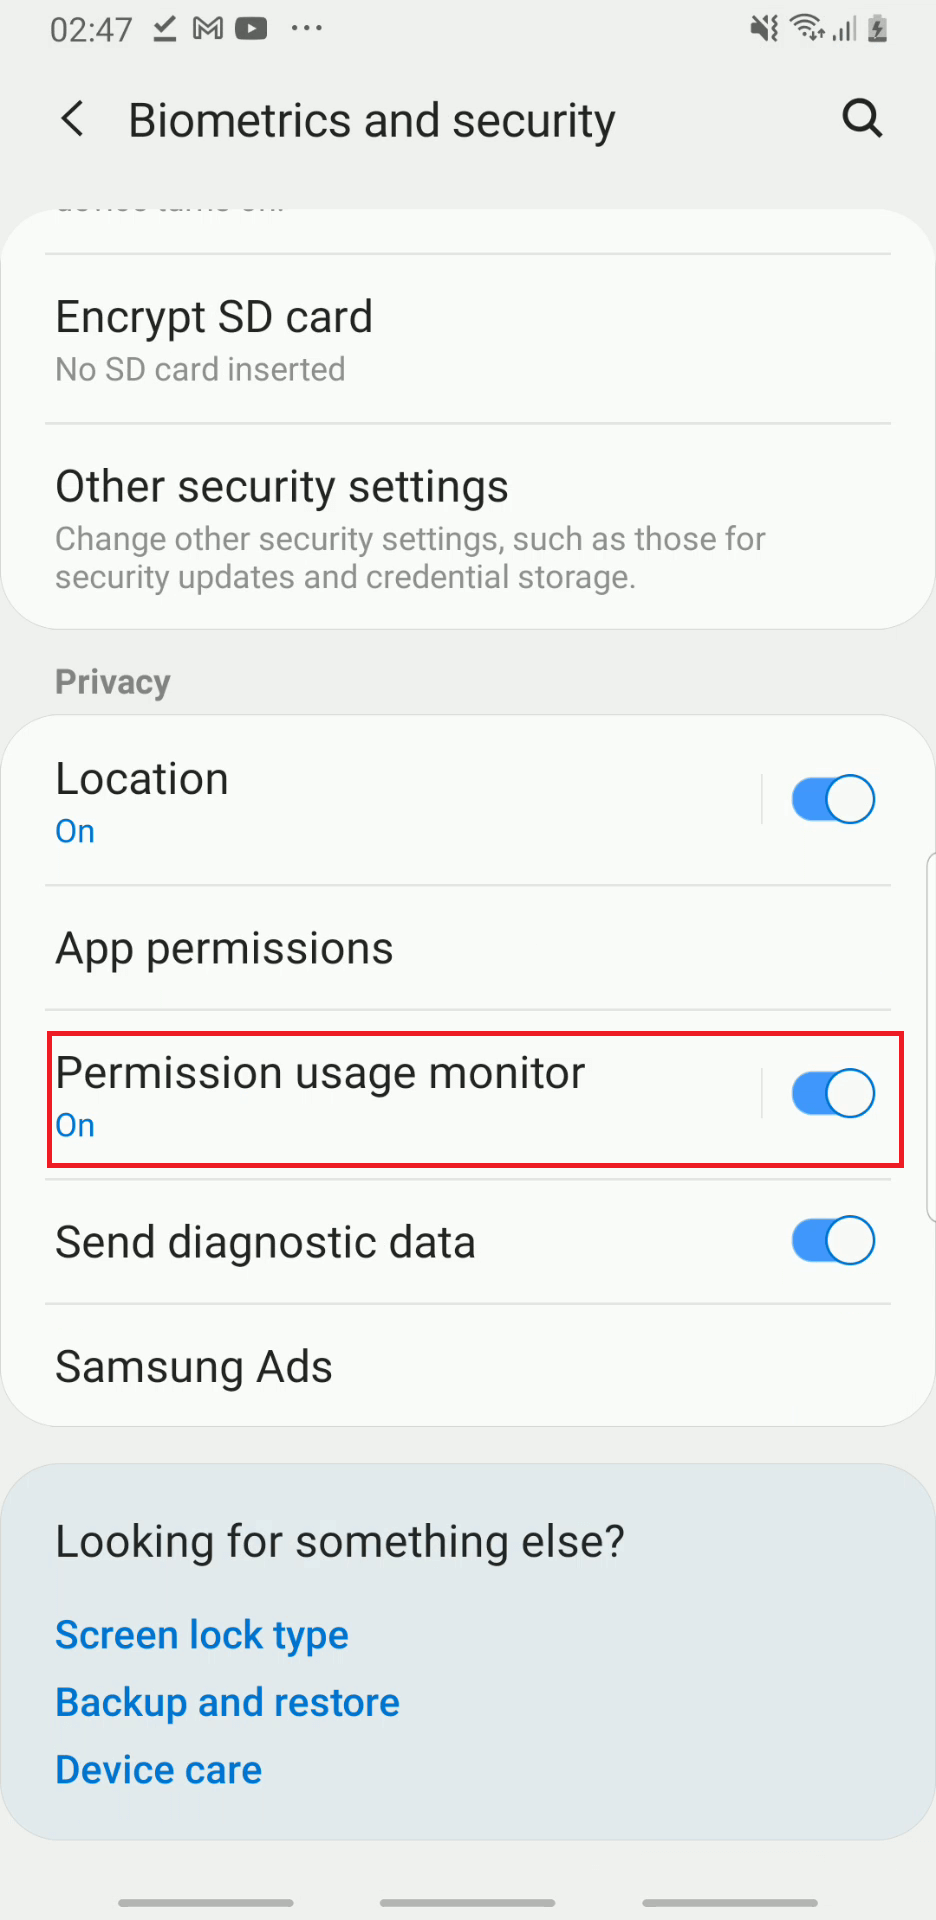 Permission usage monitor